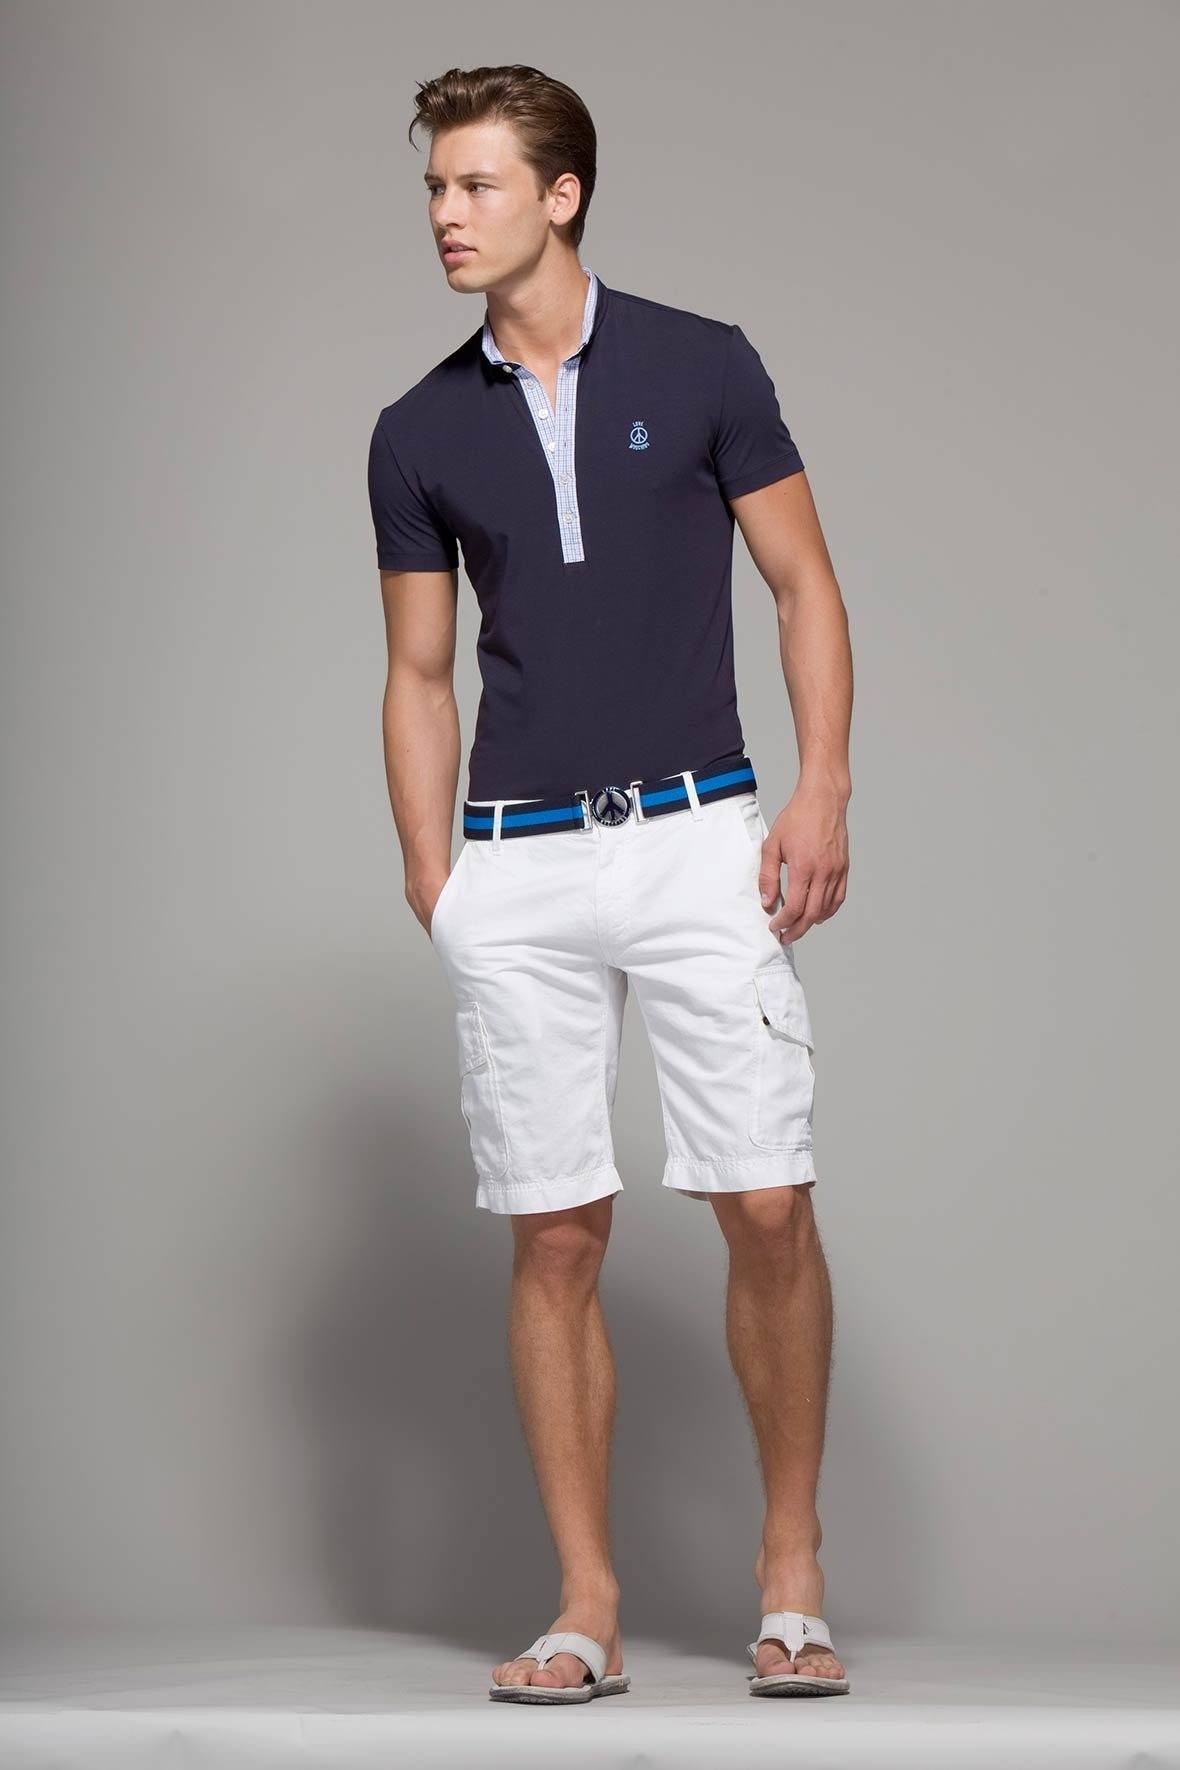 Футболка и шорты синие. Одежда на лето мужская. Летняя одежда для мужчин. Летний стиль одежды для мужчин. Стильная мужская одежда на лето.